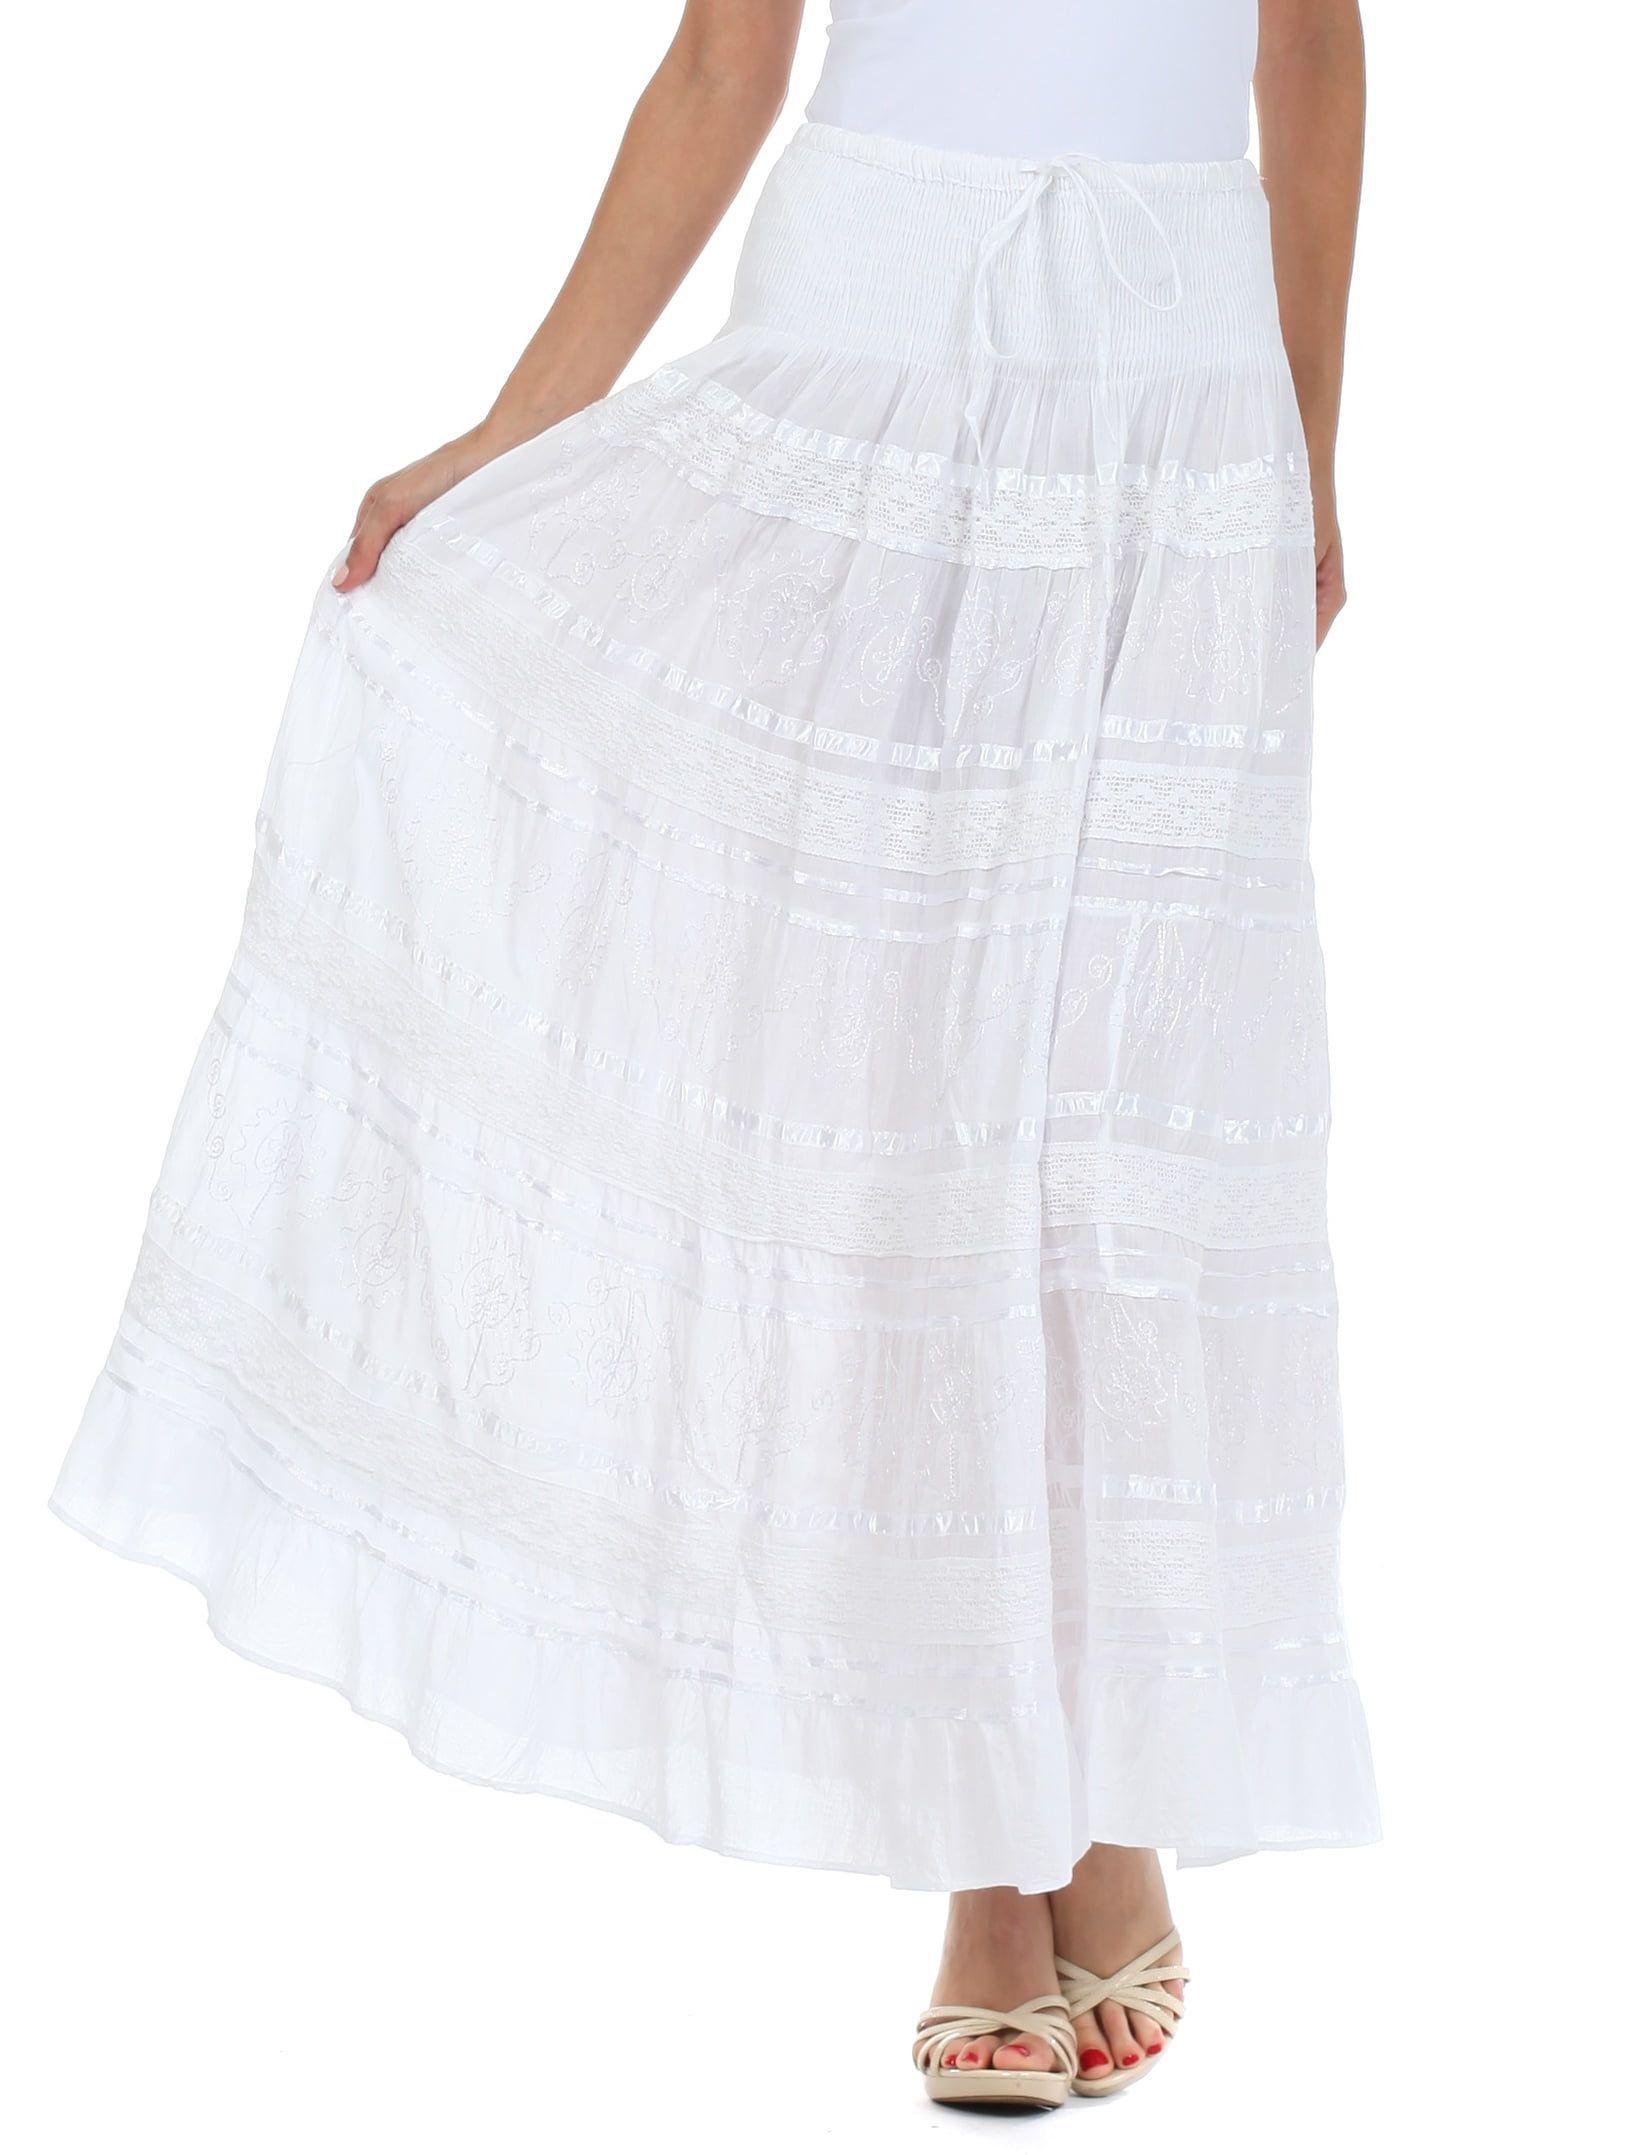 Sakkas Lace and Ribbon Peasant Boho Skirt - White - One Size - Walmart.com